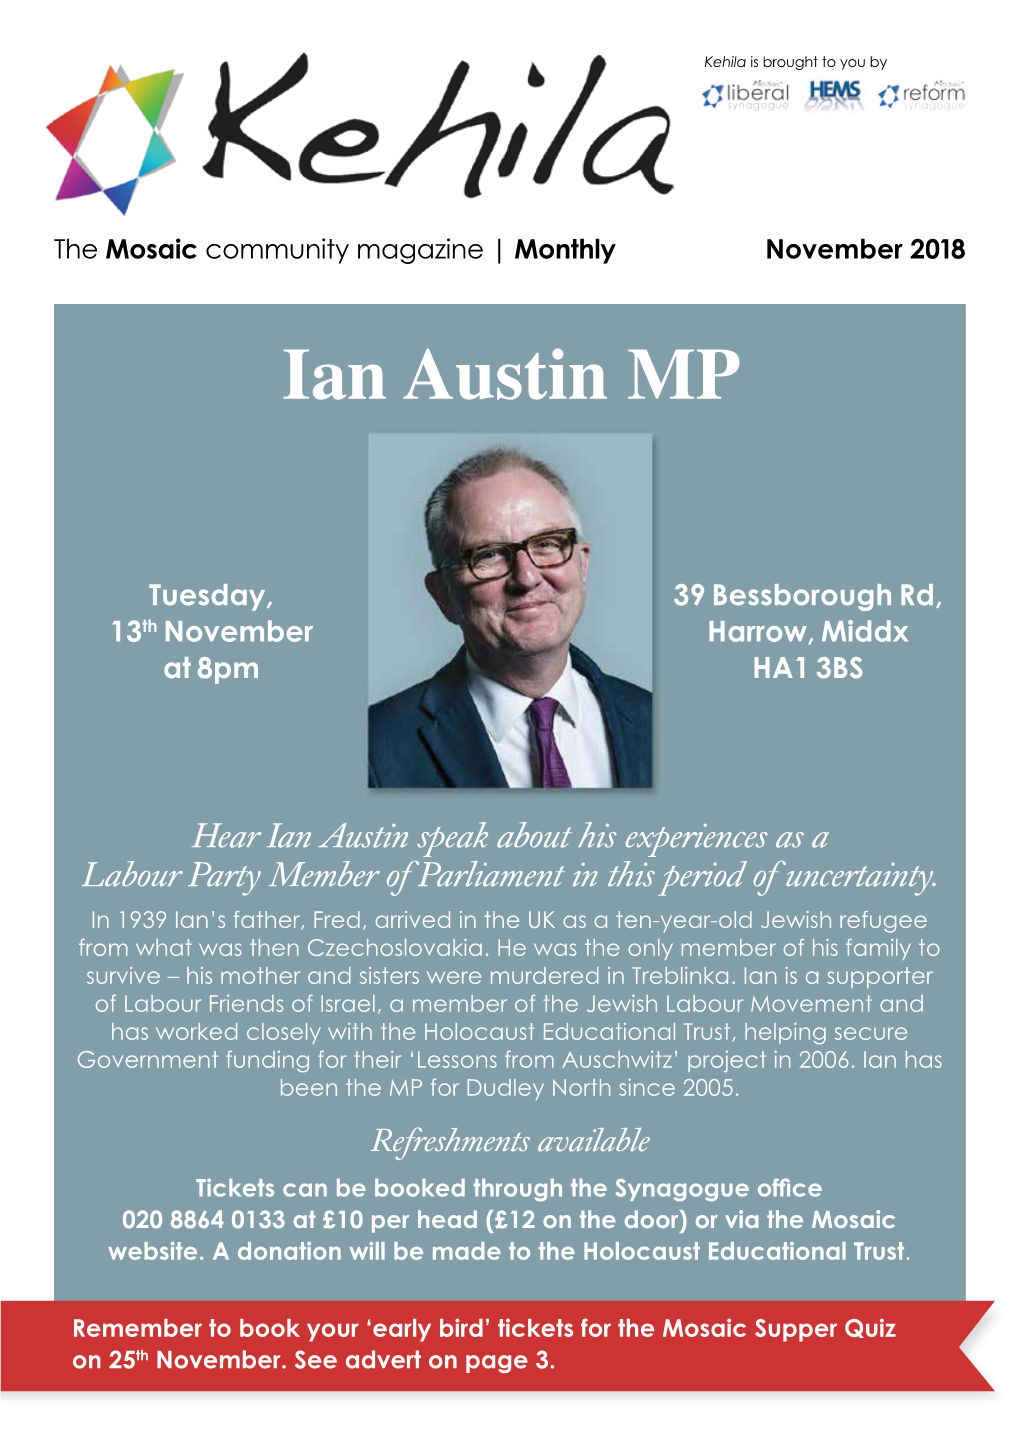 Ian Austin MP